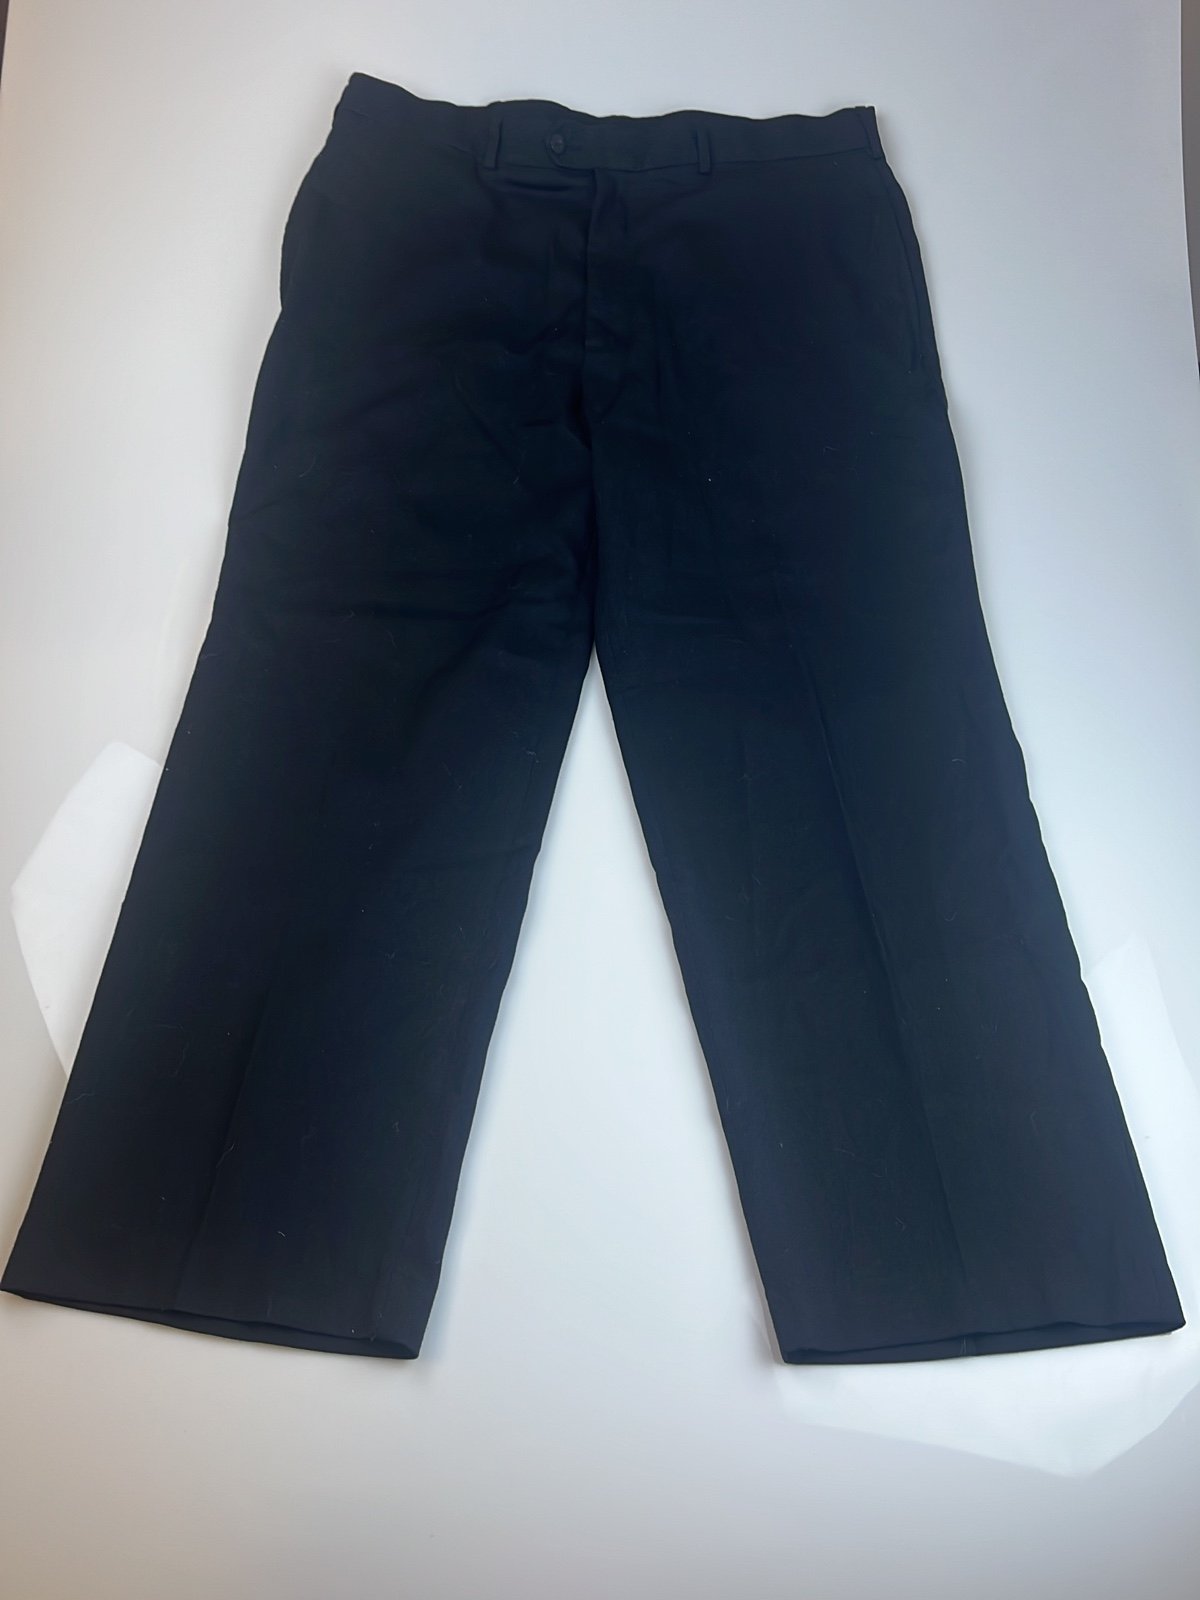 Stylish Van Heusen Black Pants S8-24 Kn4HIyiKu Buying C